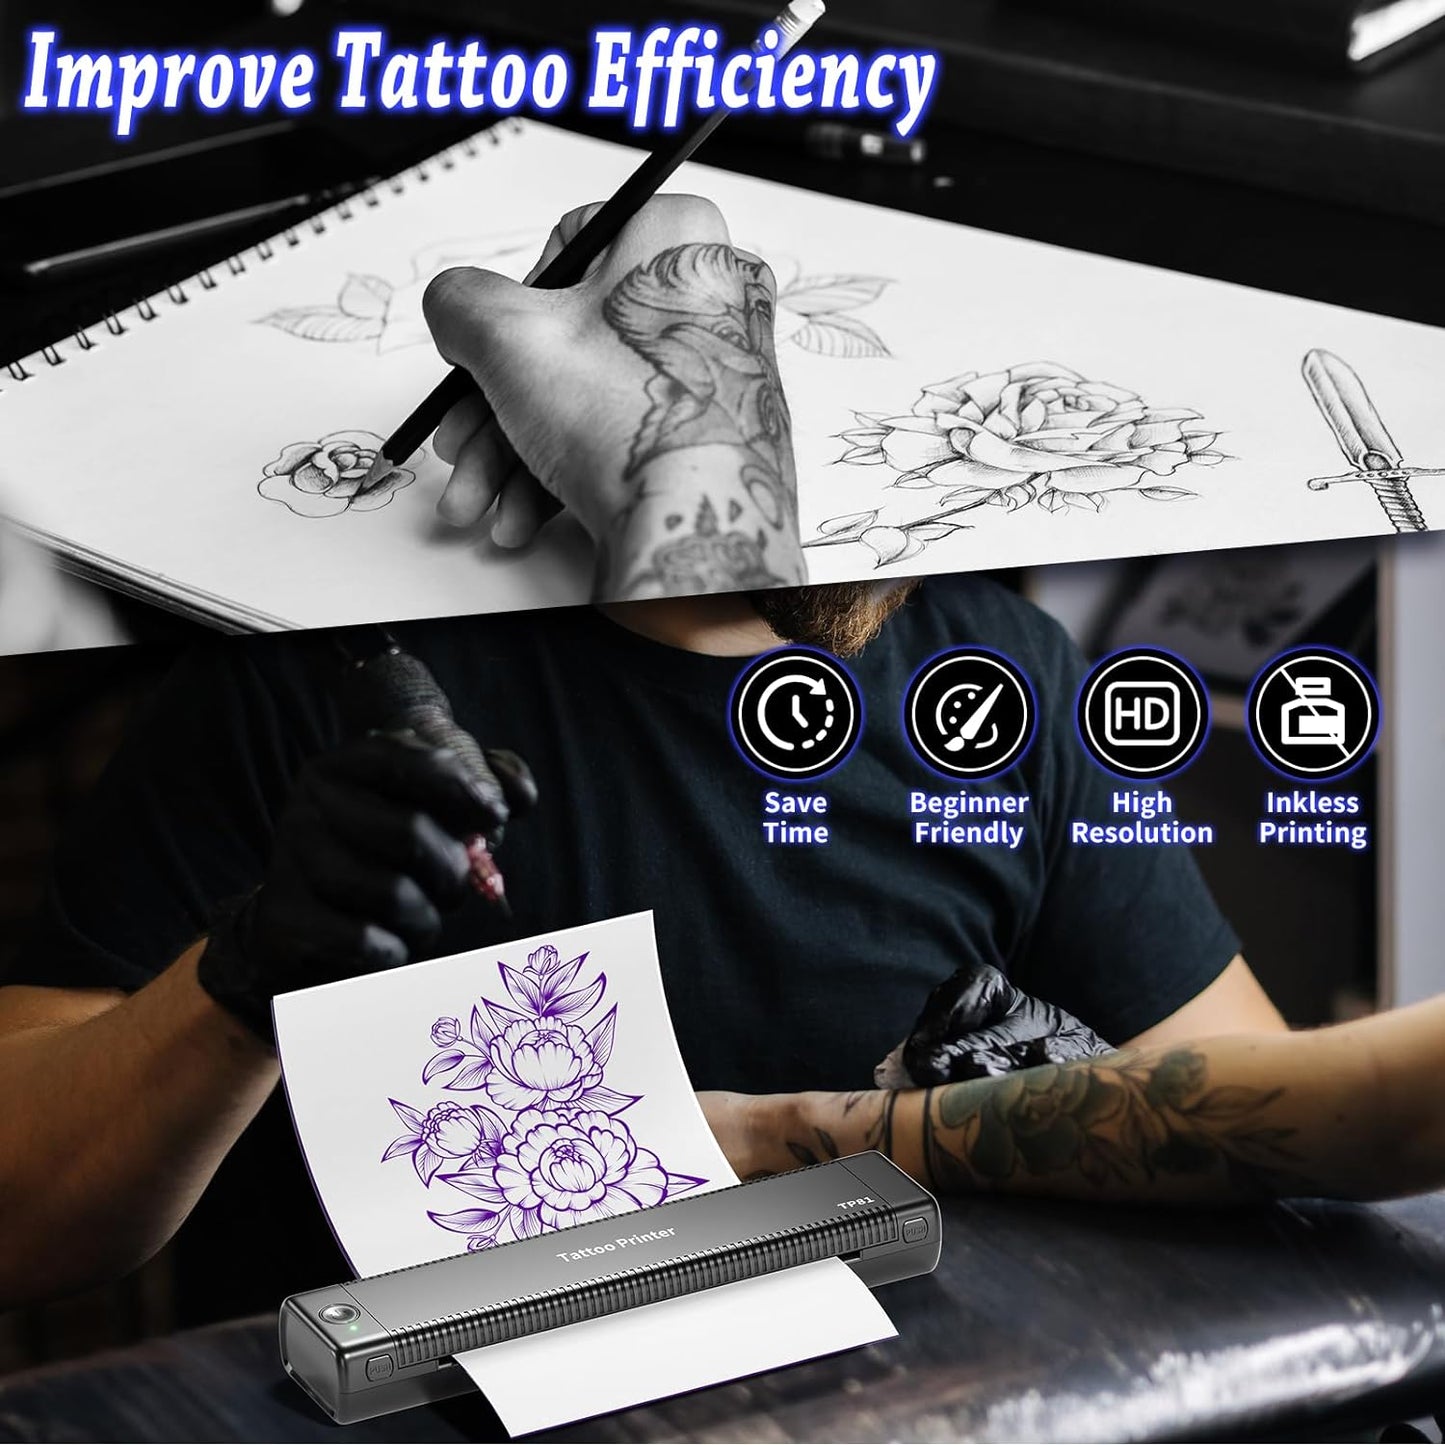 TP81Wireless Bluetooth Tattoo Stencil Printer with 10pcs Tattoo Transfer Paper for Temporary Tattoos